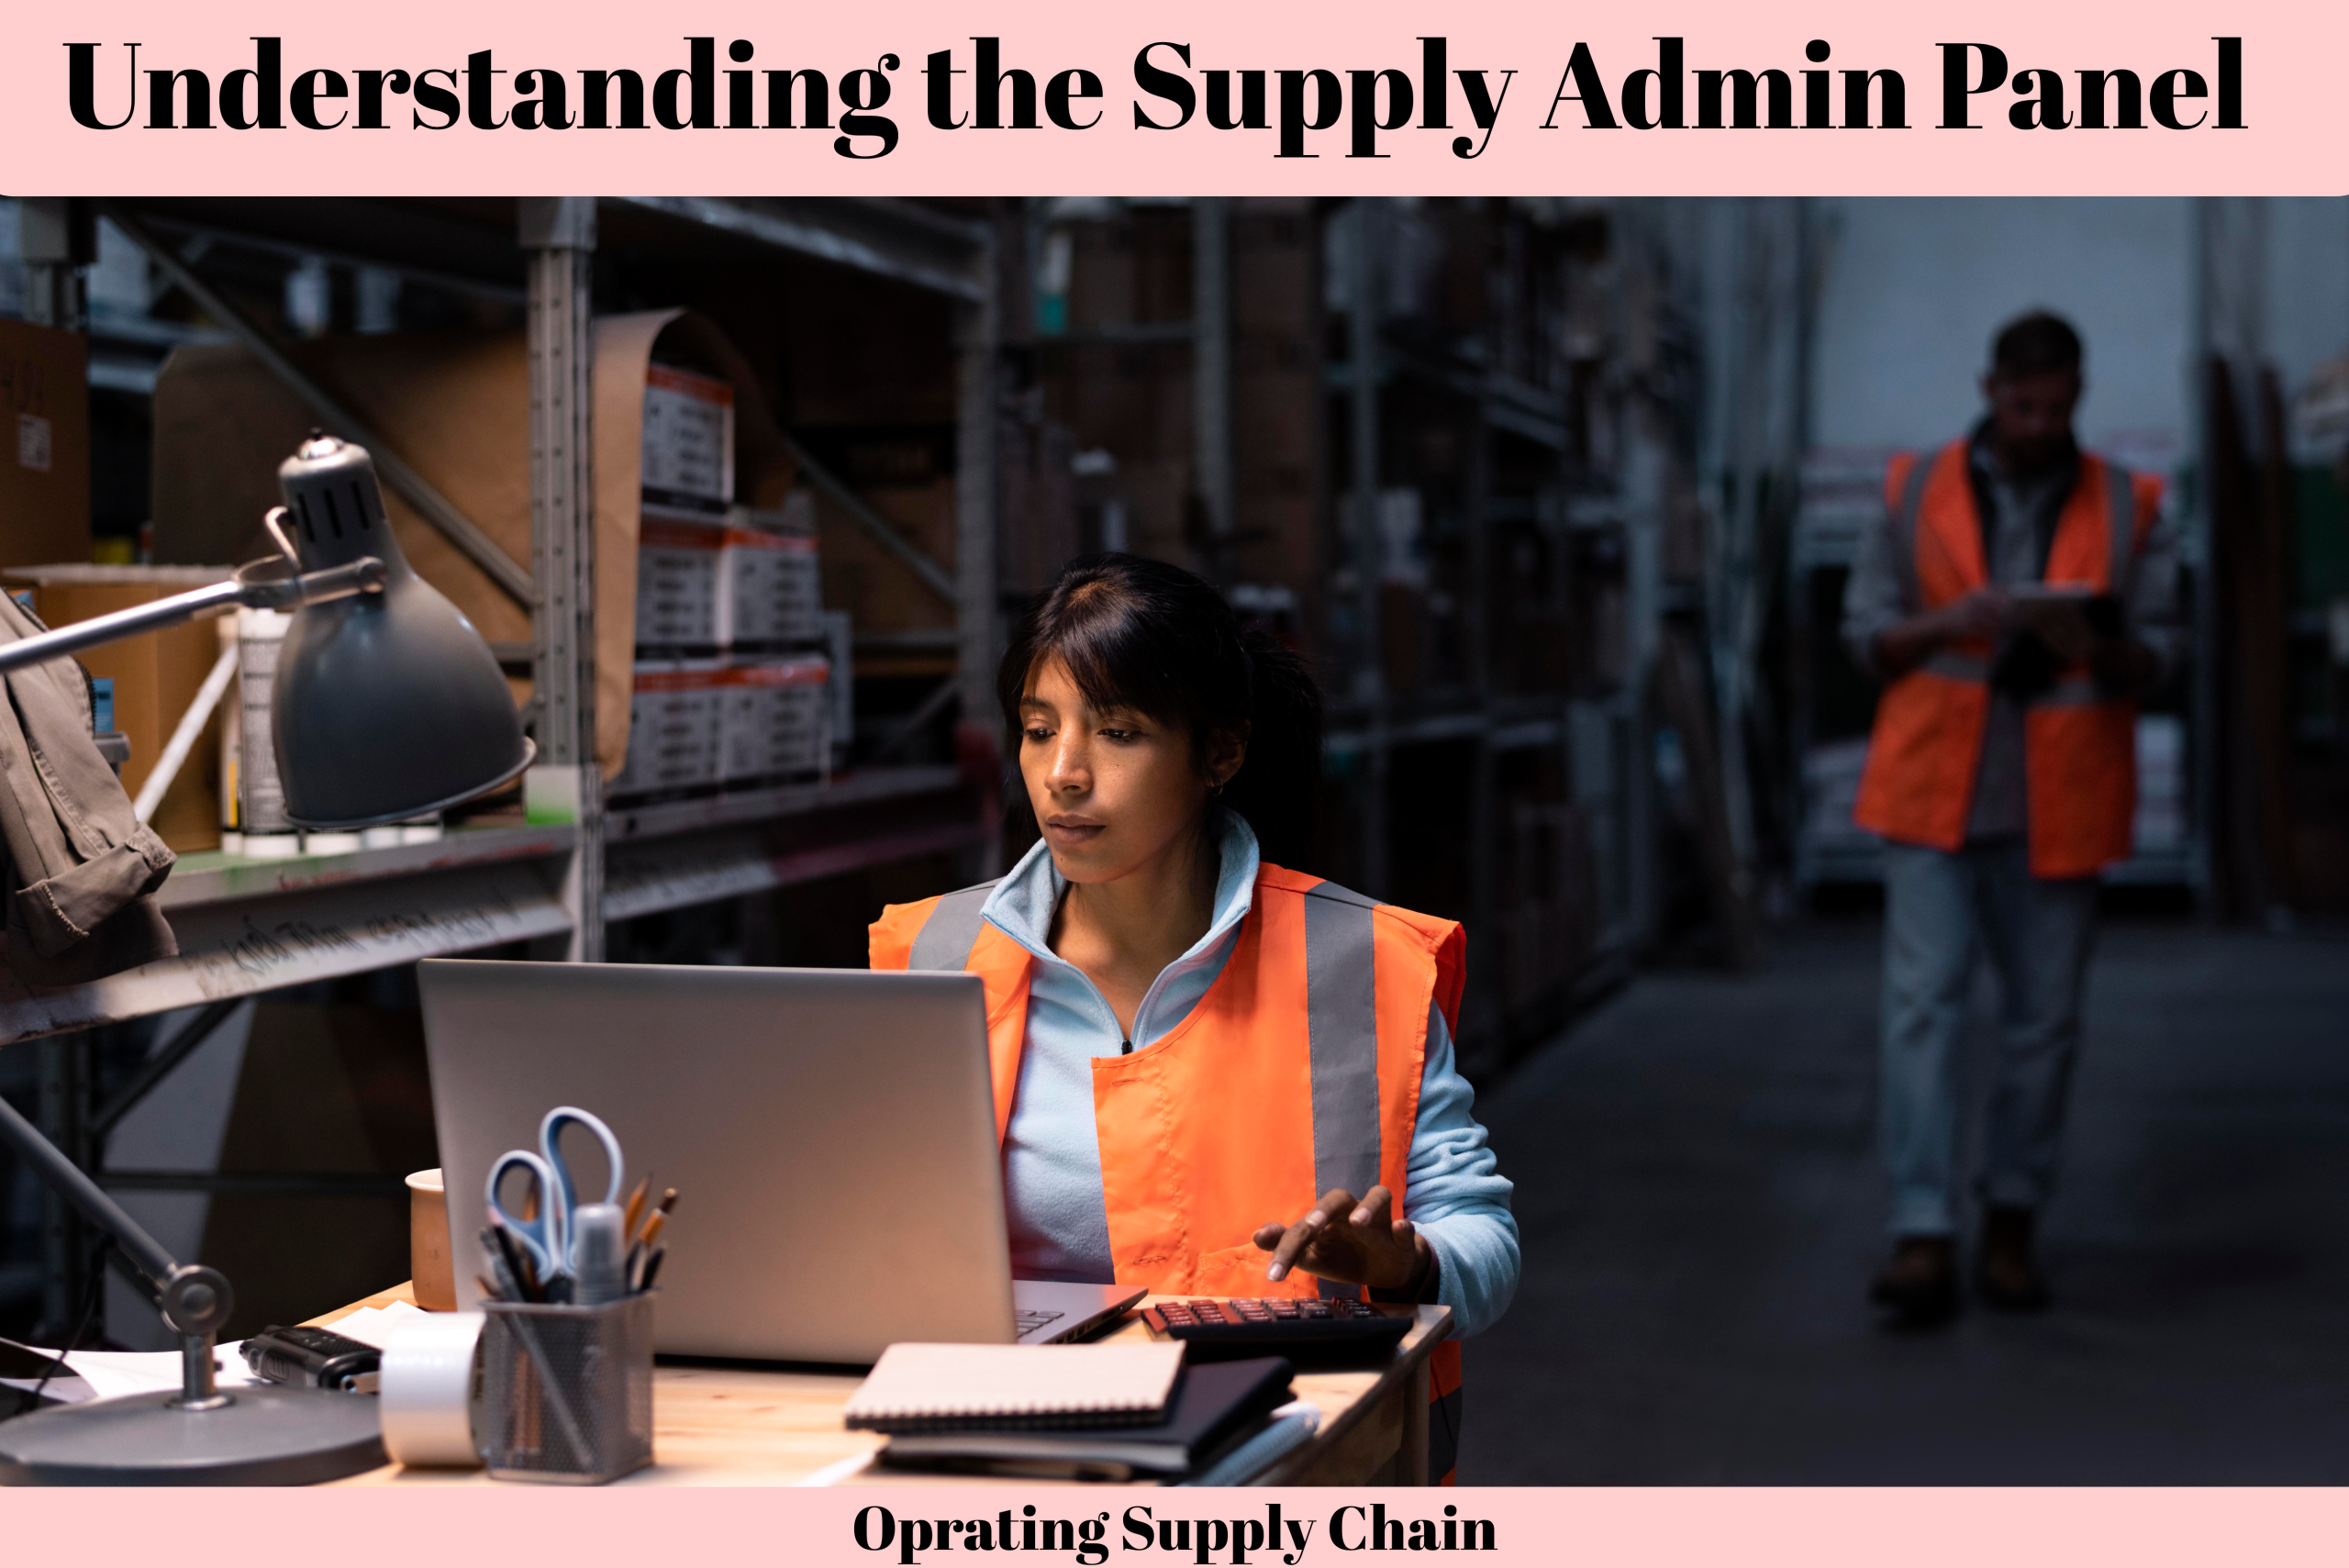 Supply Admin Panel